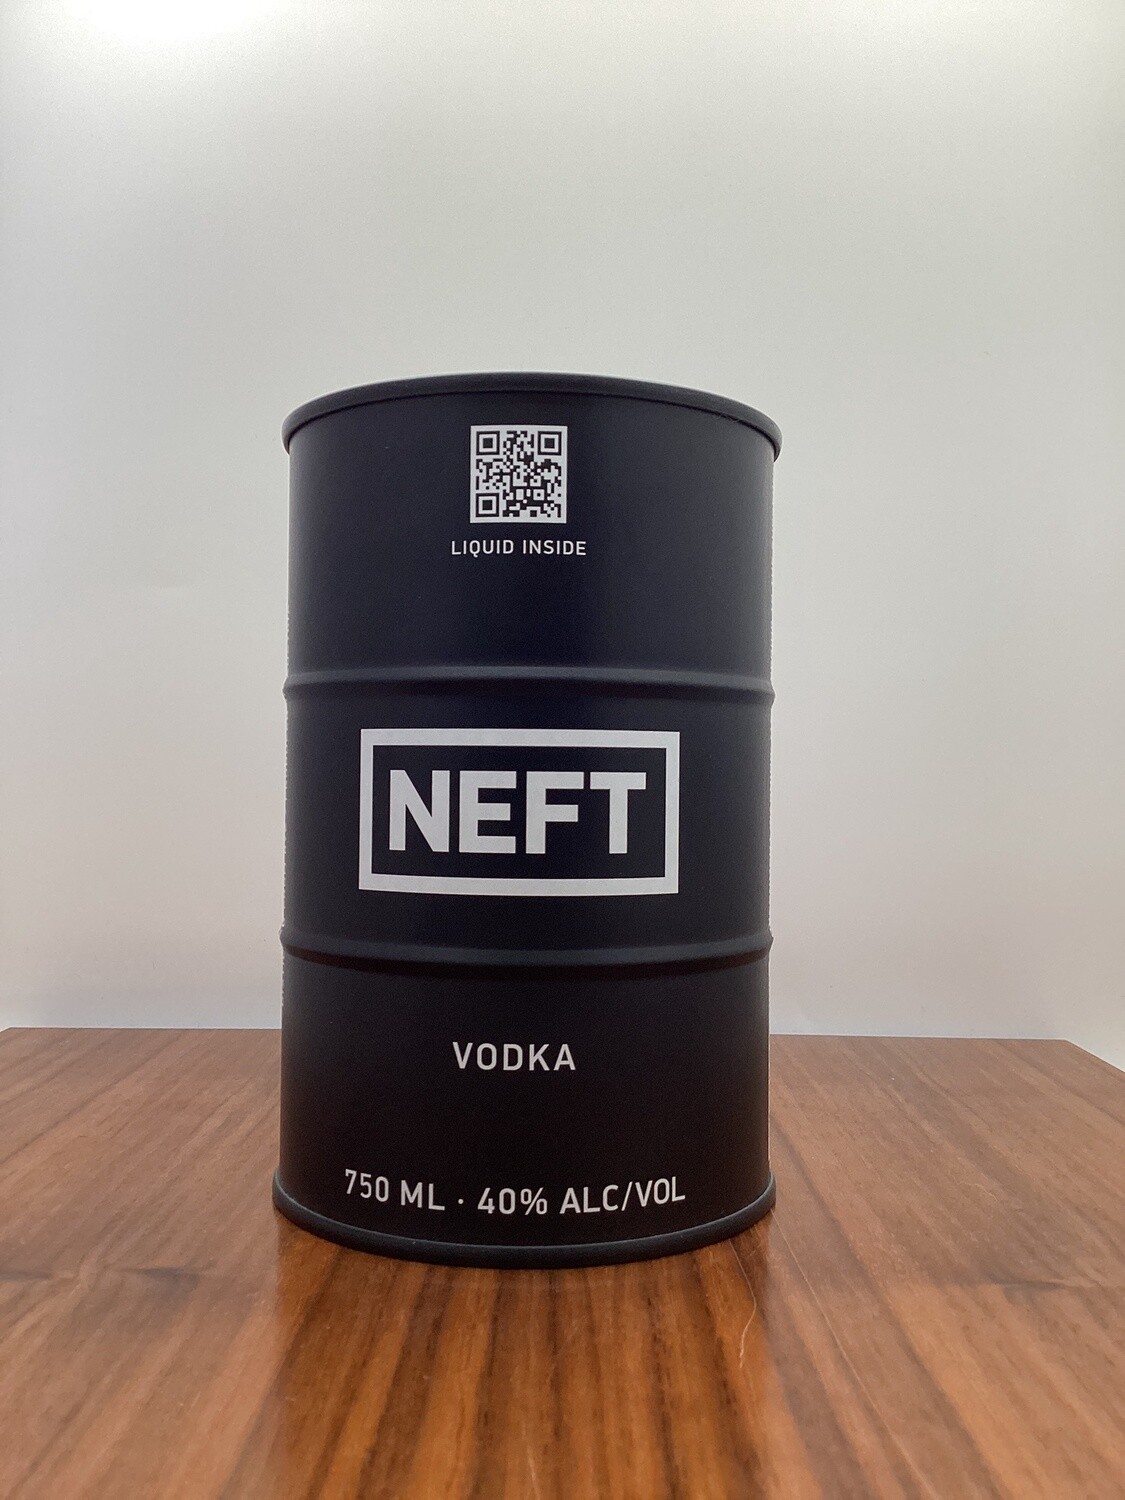 NEFT Vodka, Black Barrel Vodka